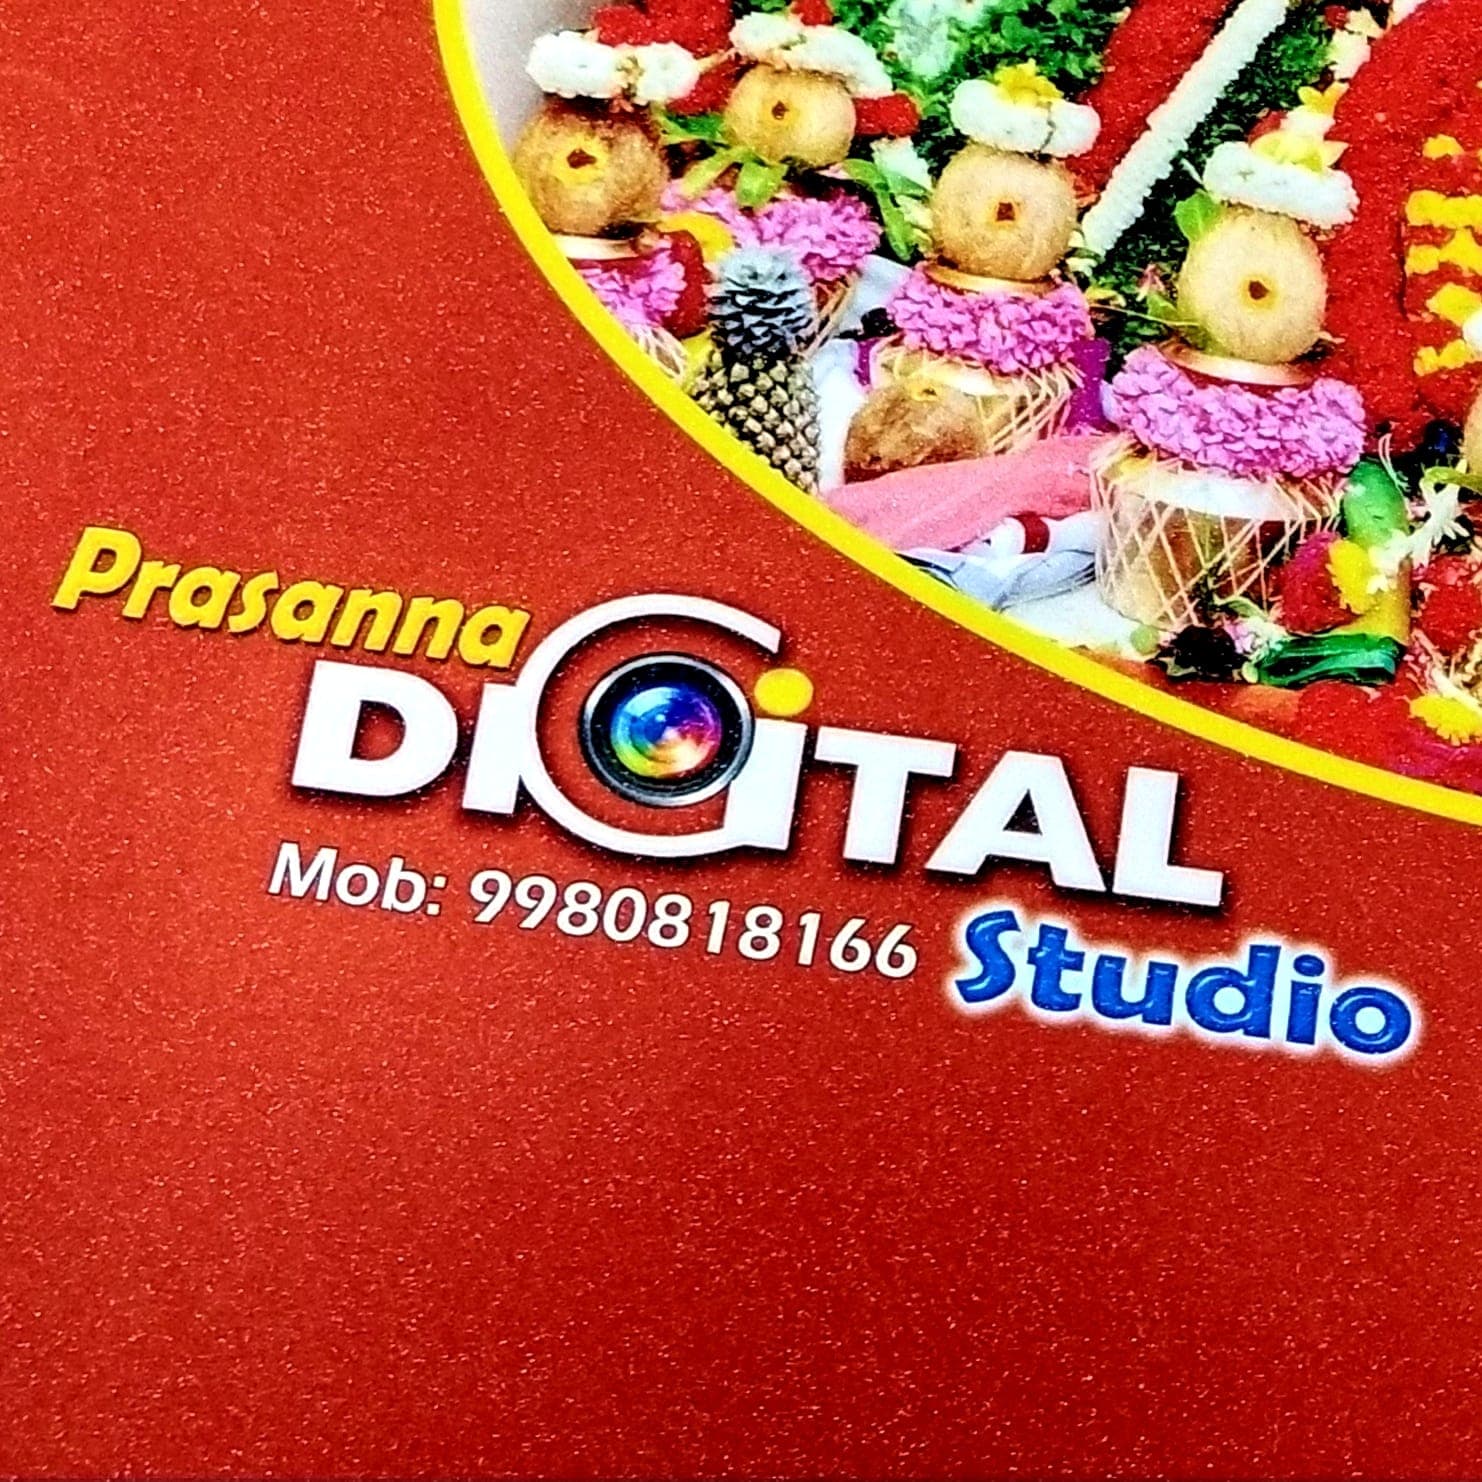 Prasanna Digital Studio